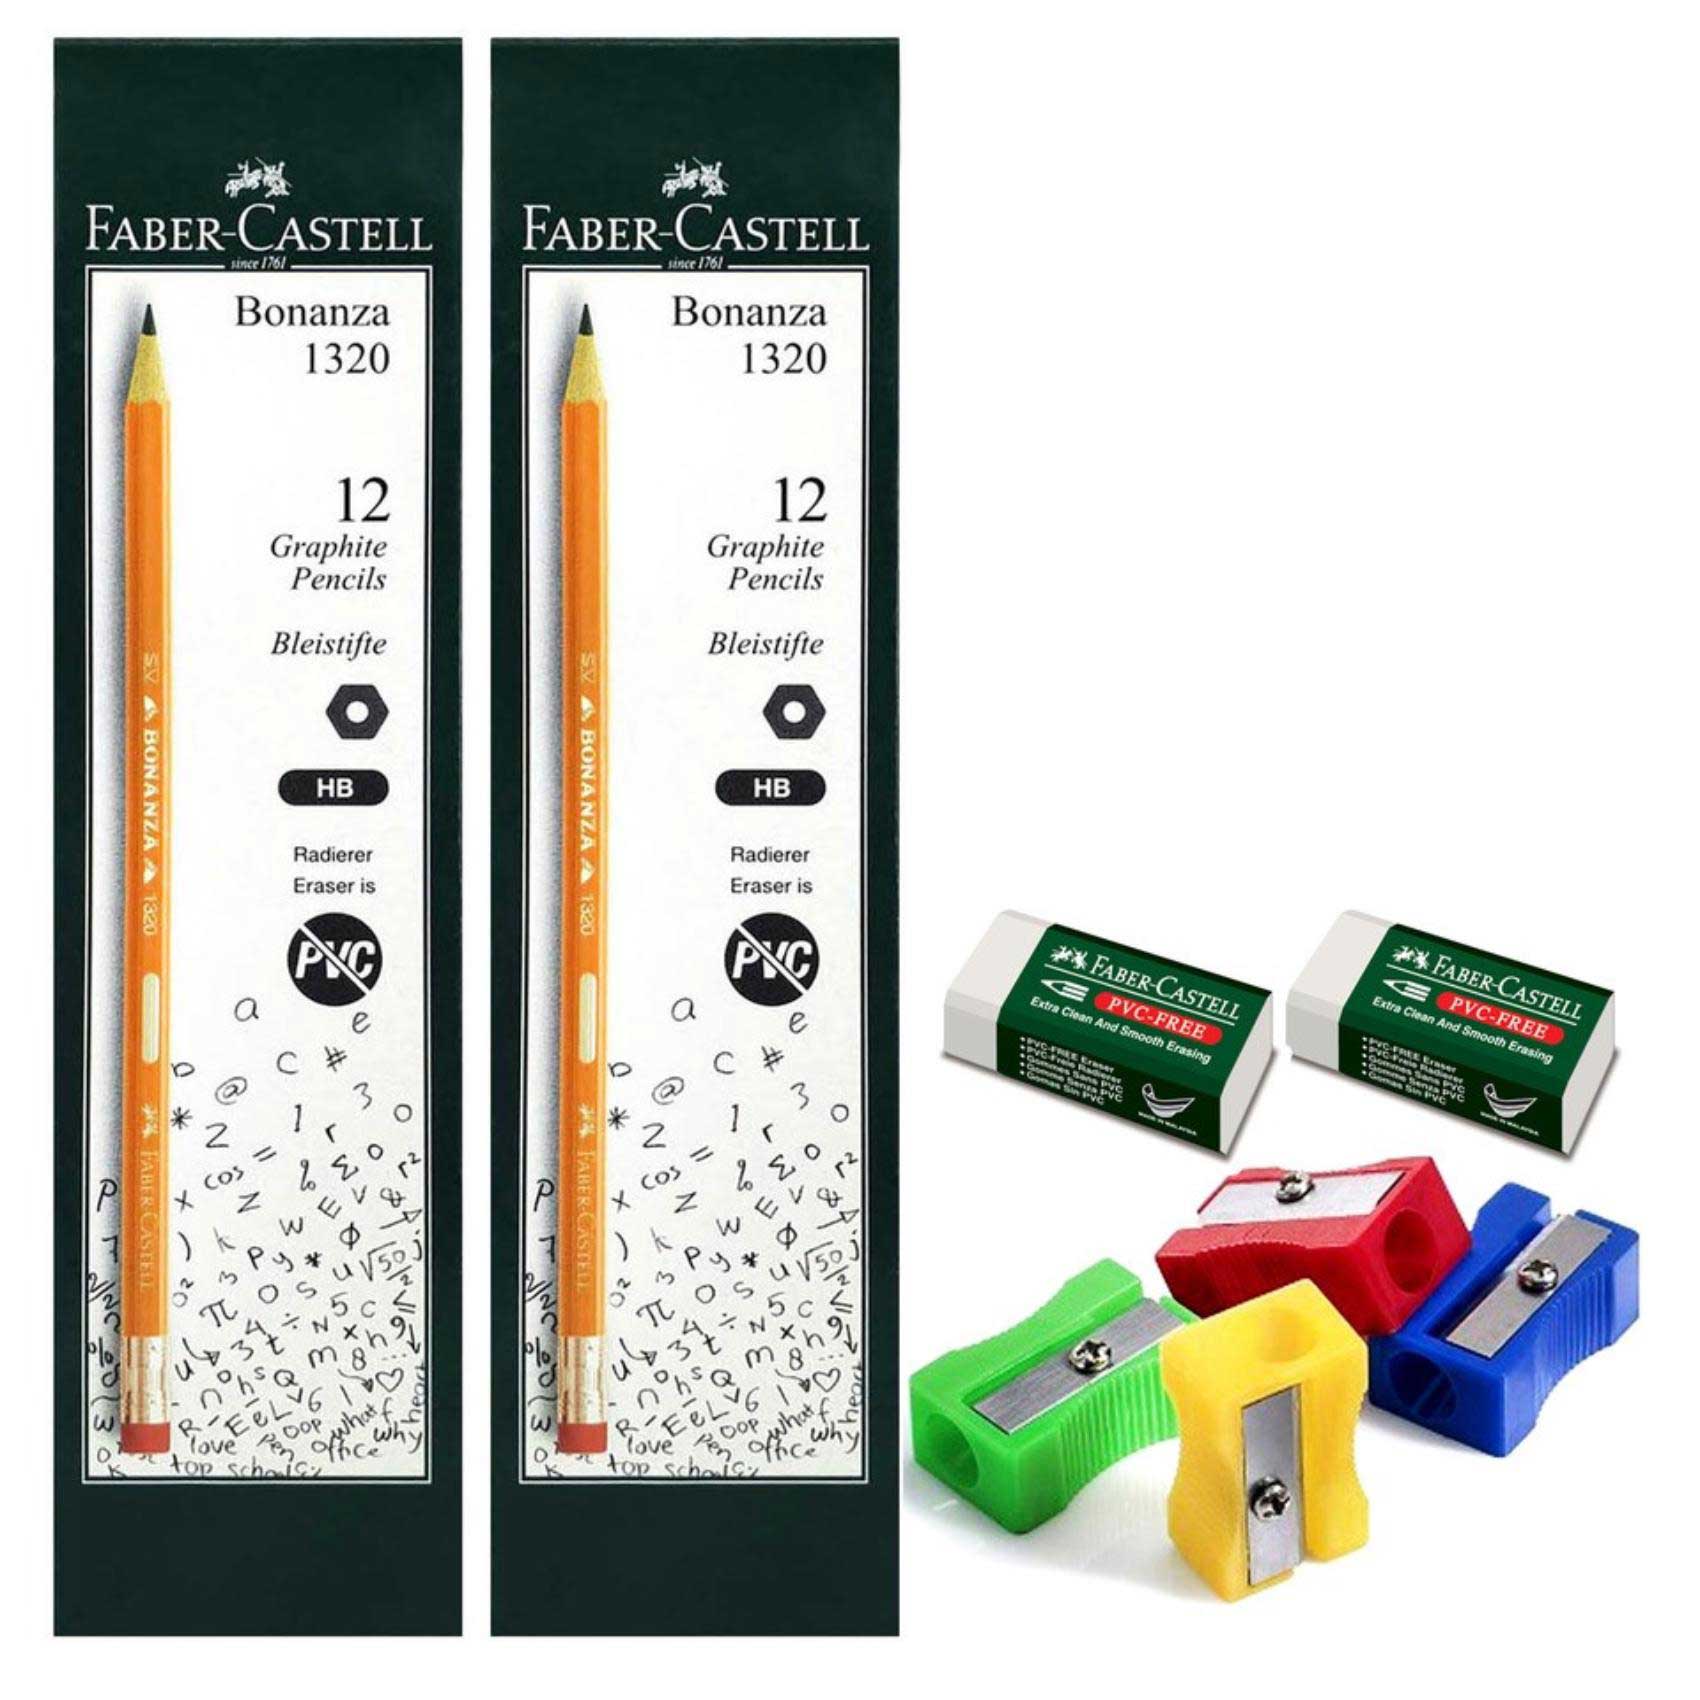 Faber-Castell Bonanza 1320 HB Pencil Set 24 PCS with Eraser 2 PCS and Sharpener 4 PCS Multicolour